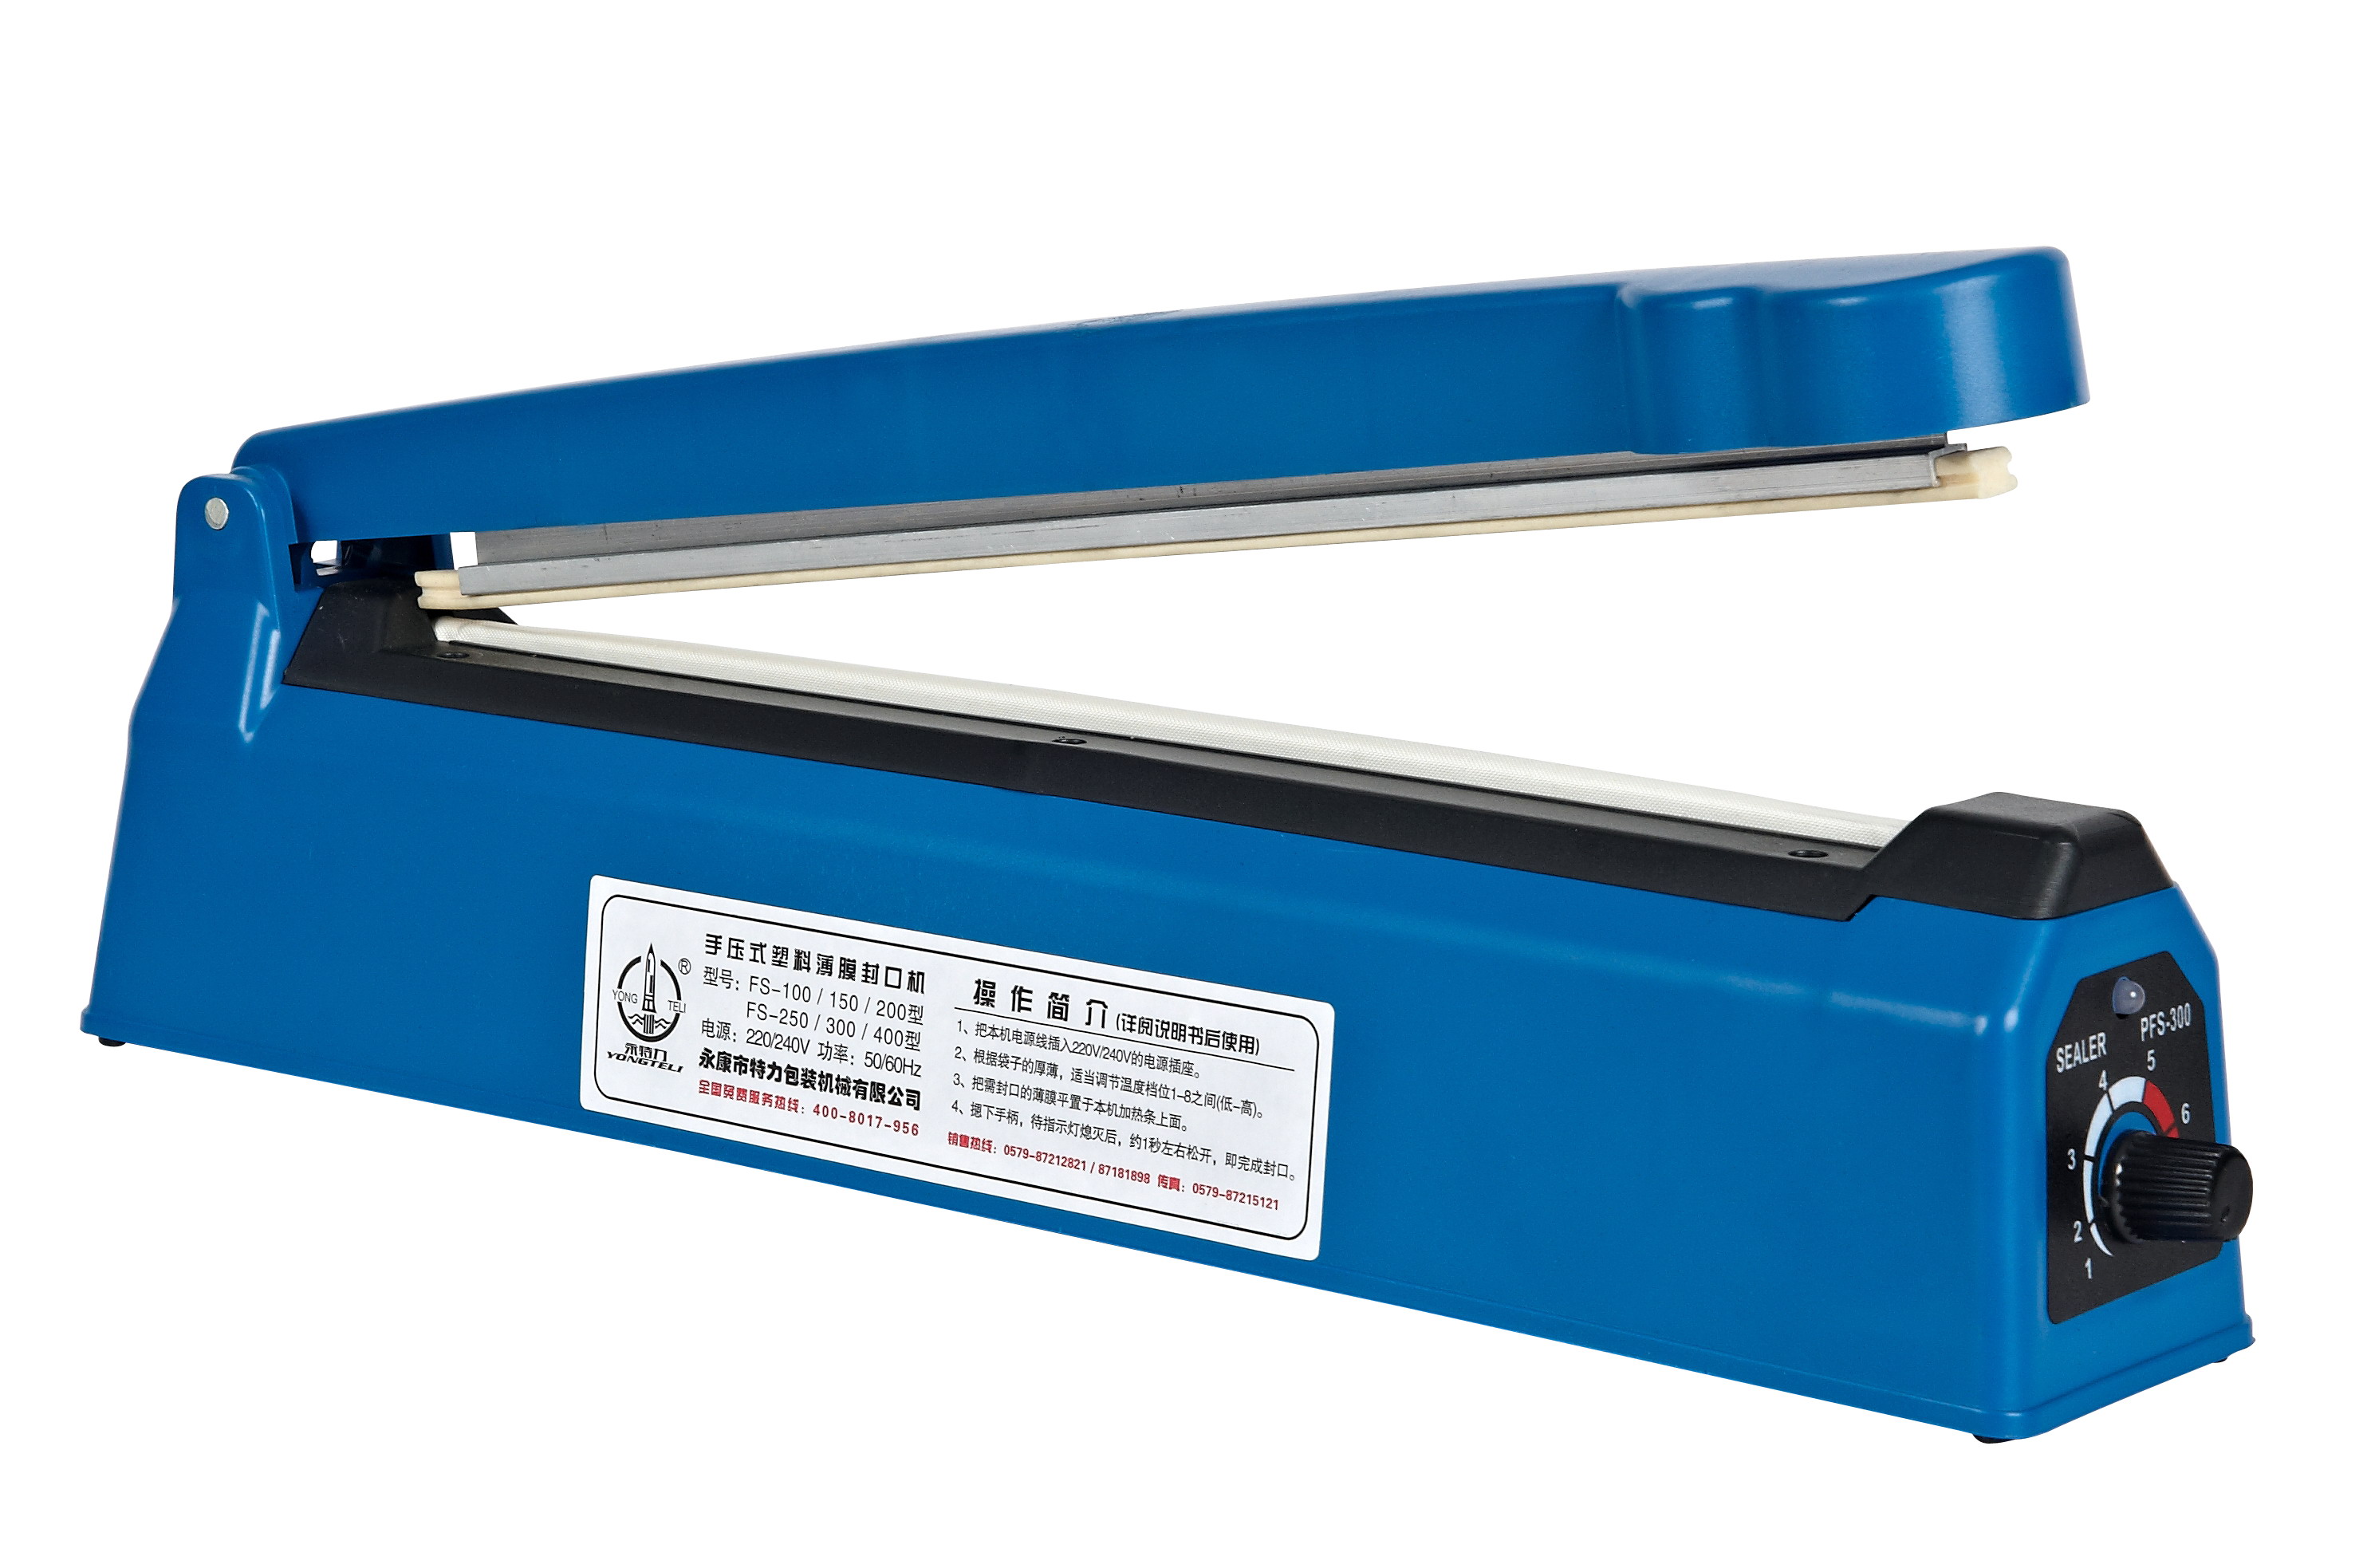 <b>Impulse Sealer Manual Poly Film Bag Sealing Machine PFS-200</b>